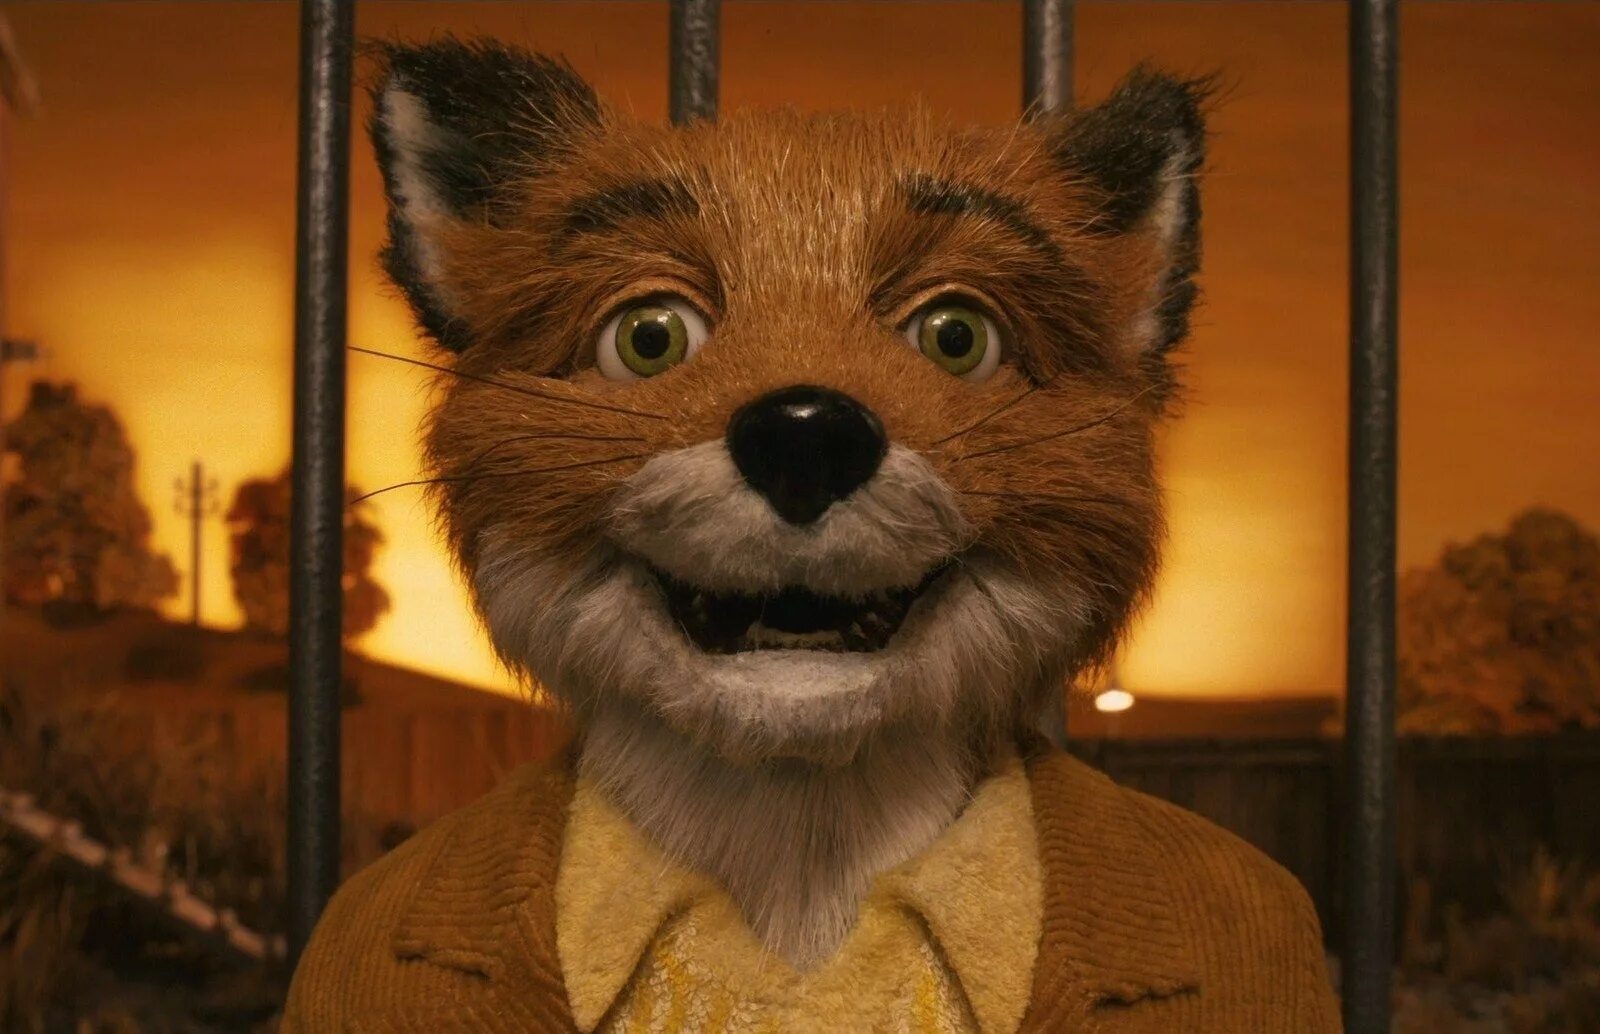 Бесподобный Мистер Фокс. Бесподобный Мистер Фокс (fantastic Mr. Fox), 2009. Уэс Андерсон бесподобный Мистер Фокс. Бесподобный Мистер ФОК. Fox см